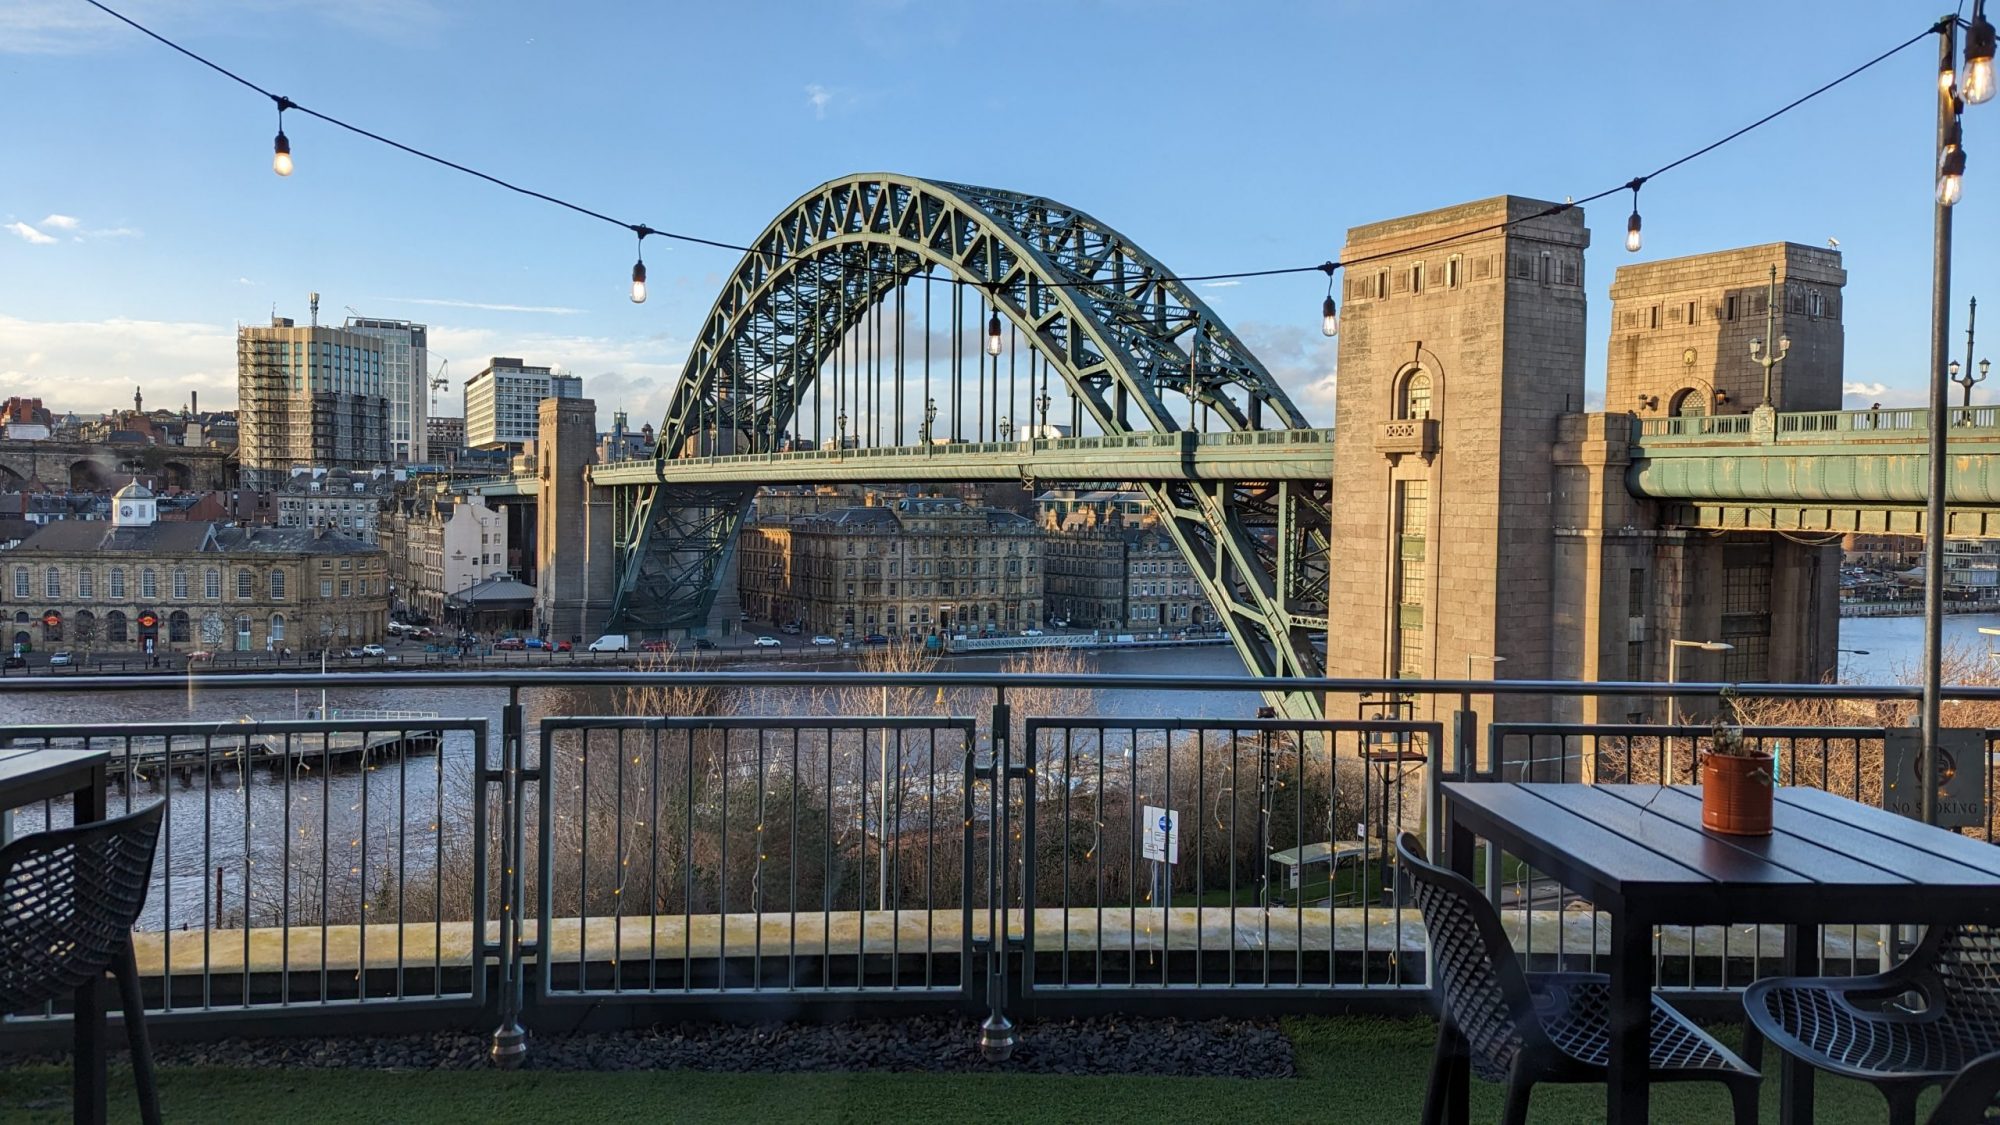 The Tyne Bridge, Newcastle Gateshead